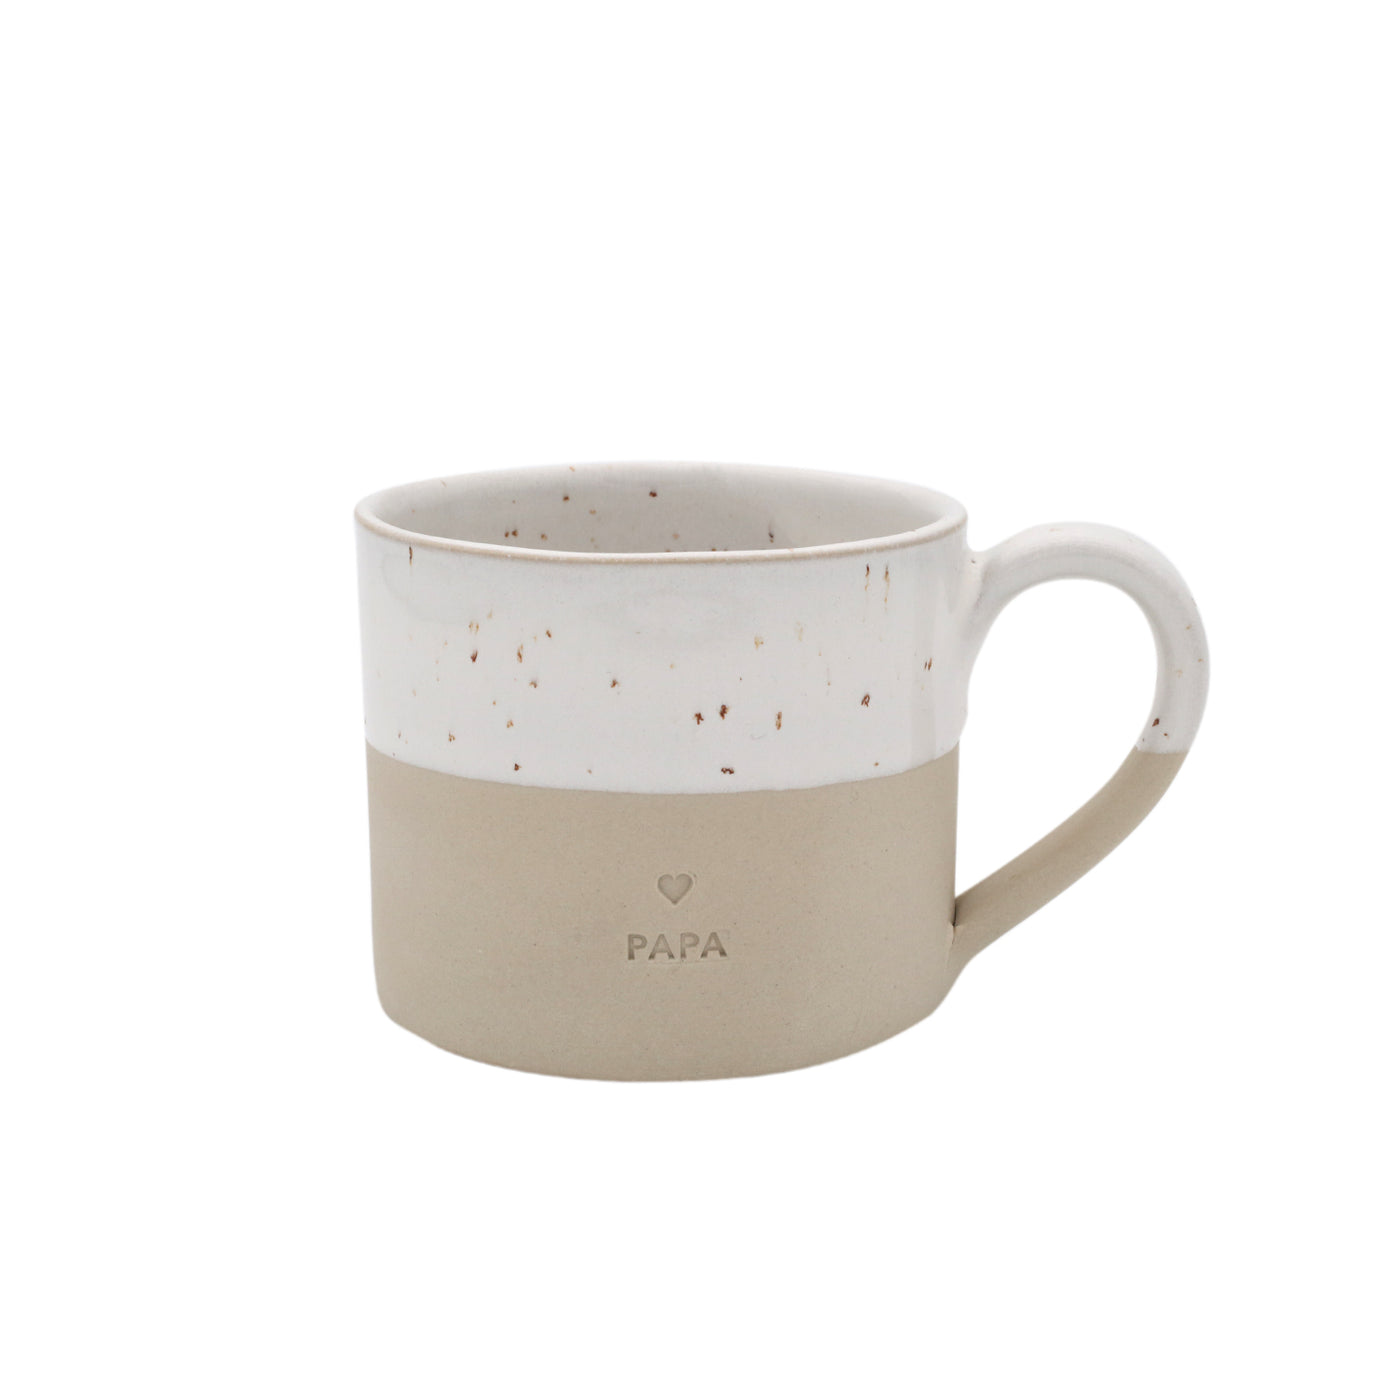 Papa mug, Stoneware